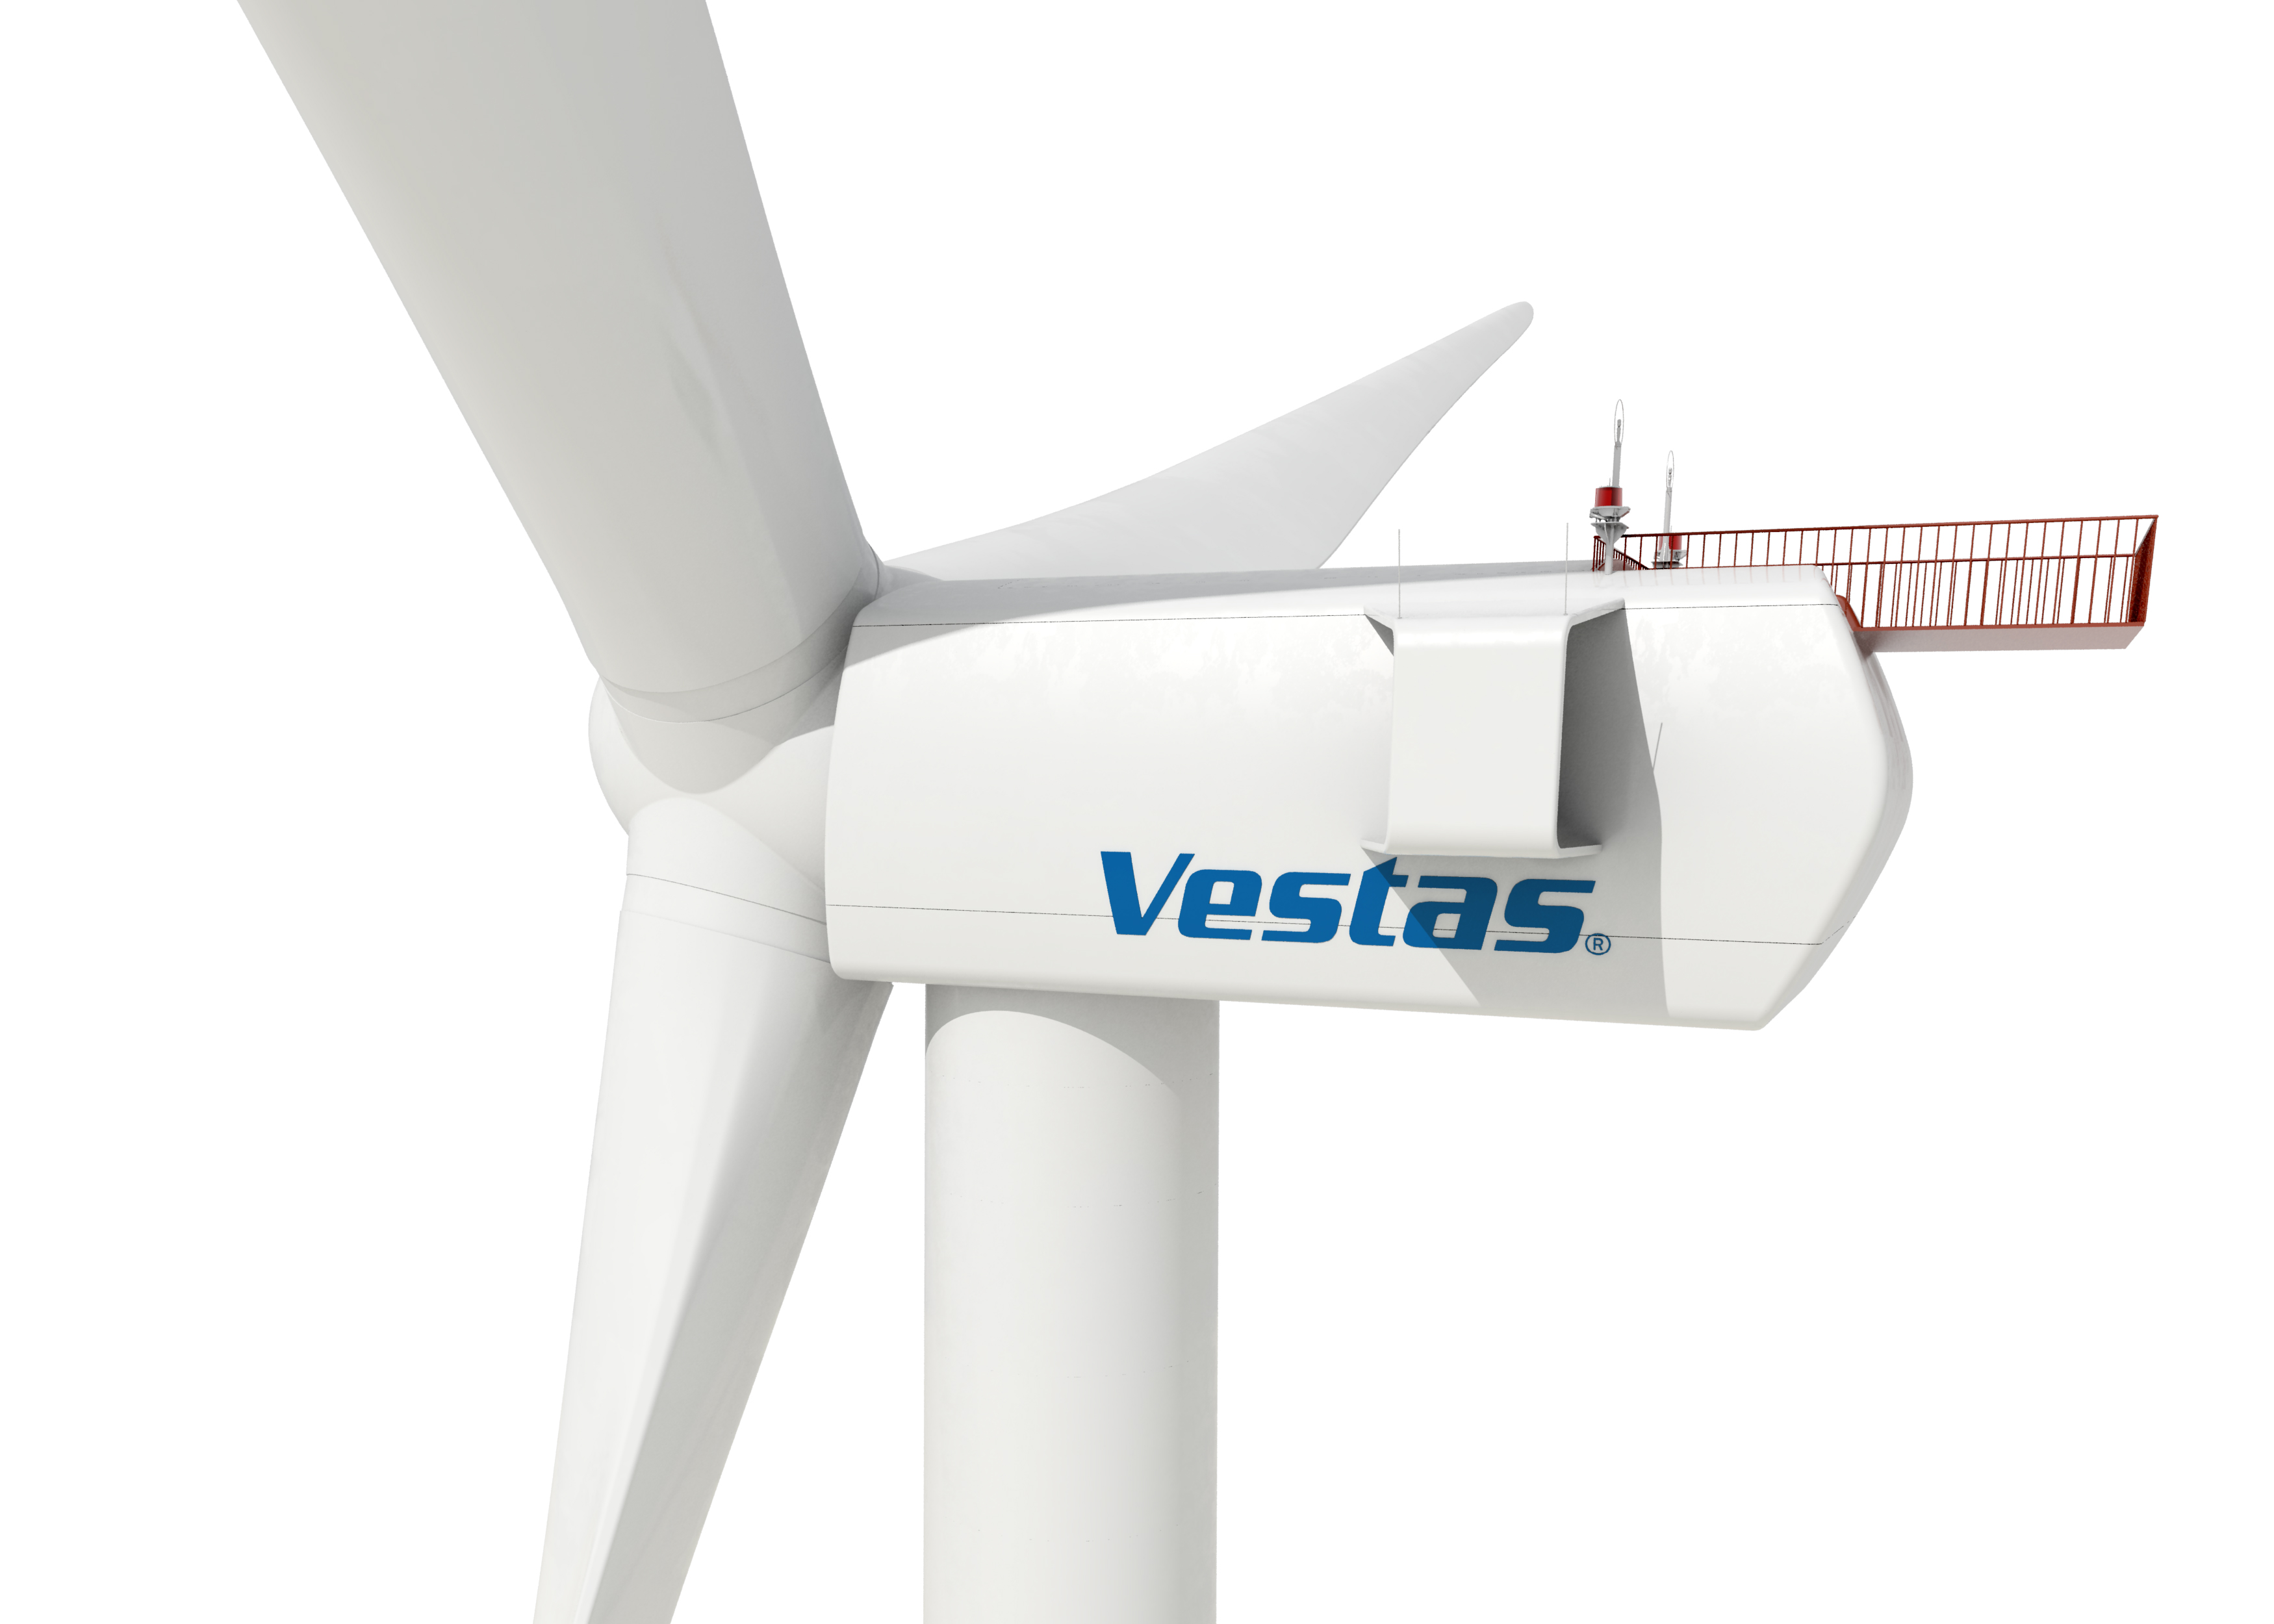 Eólica en Brasil: Vestas suministra 86 aerogeneradores seis parques eólicos